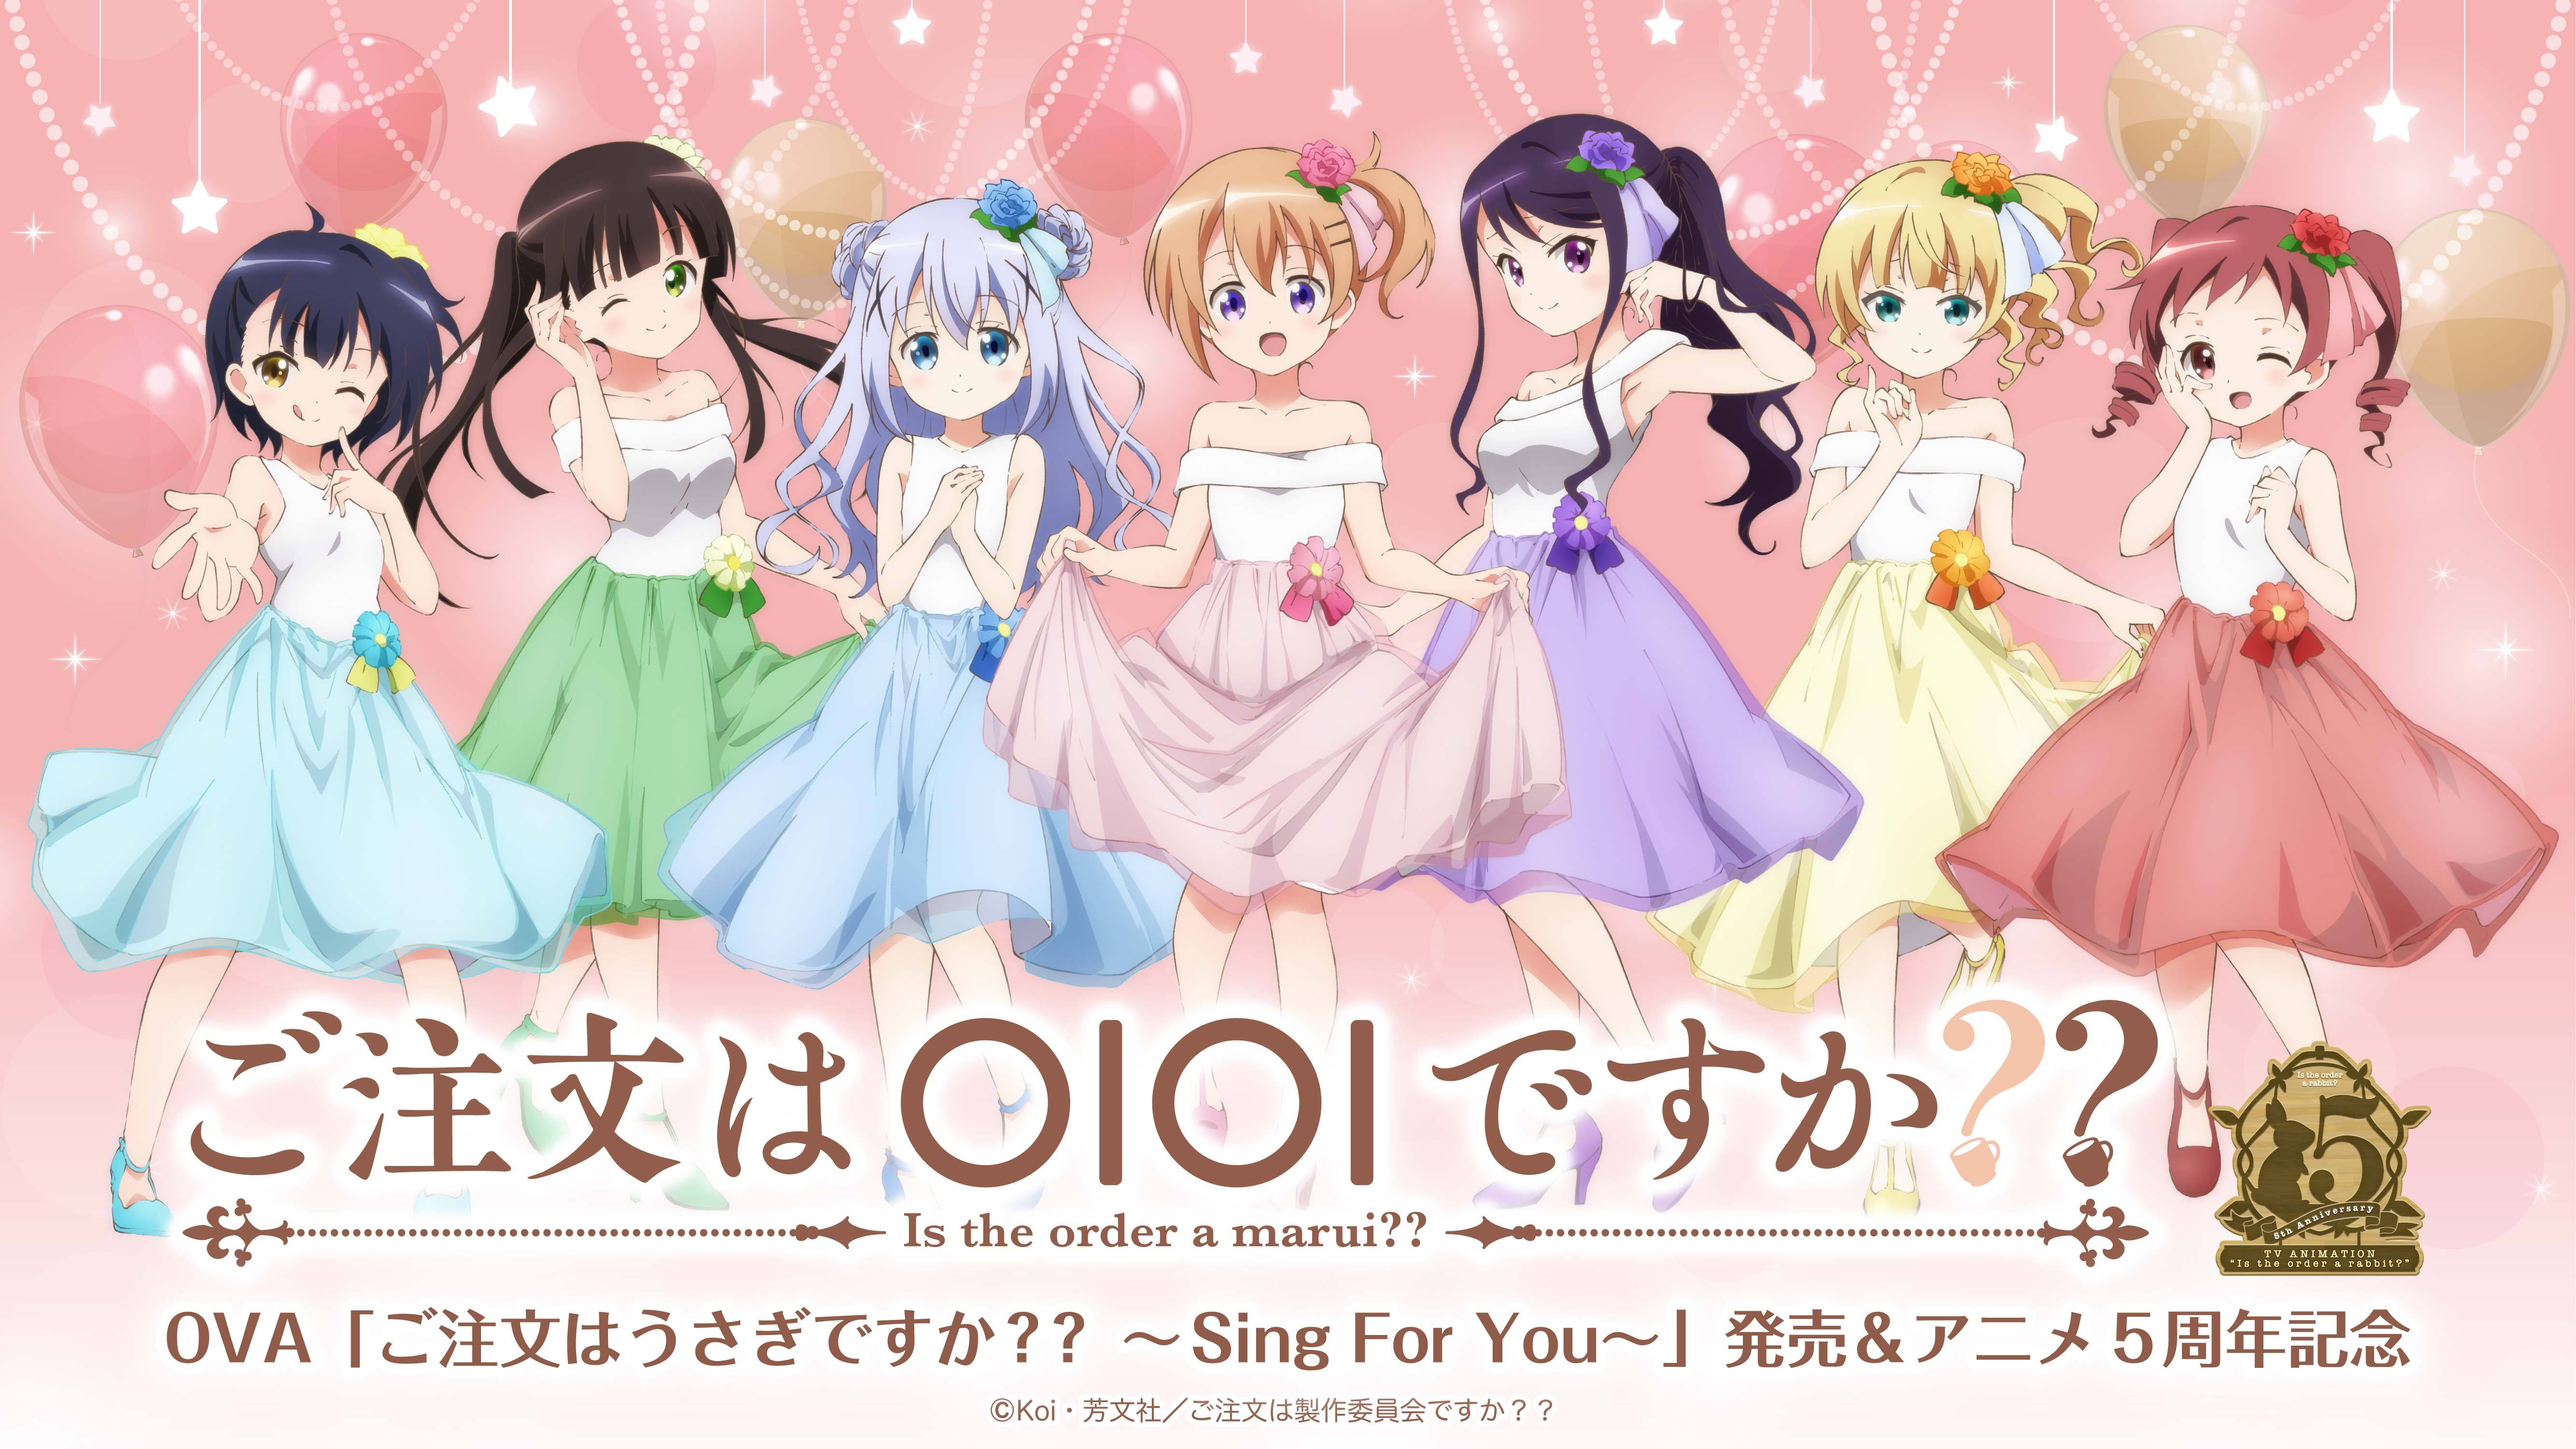 Gochuumon wa Usagi Desuka?? Sing for You - Anime - AniDB